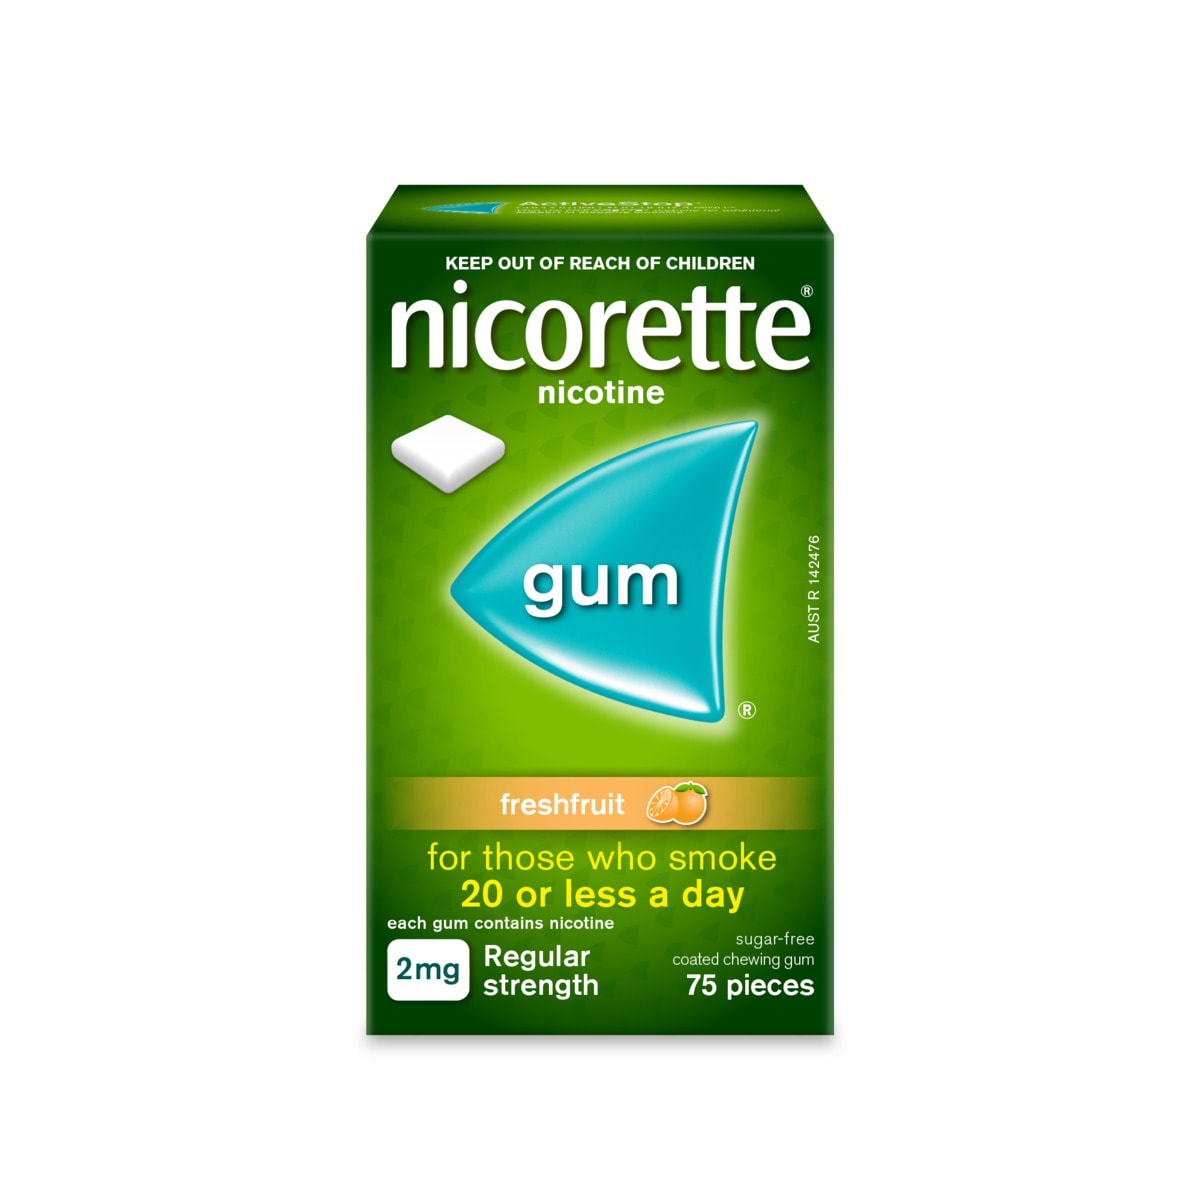 Nicorette Quit Smoking Nicotine Gum 2mg Fresh Fruit 75 Pack